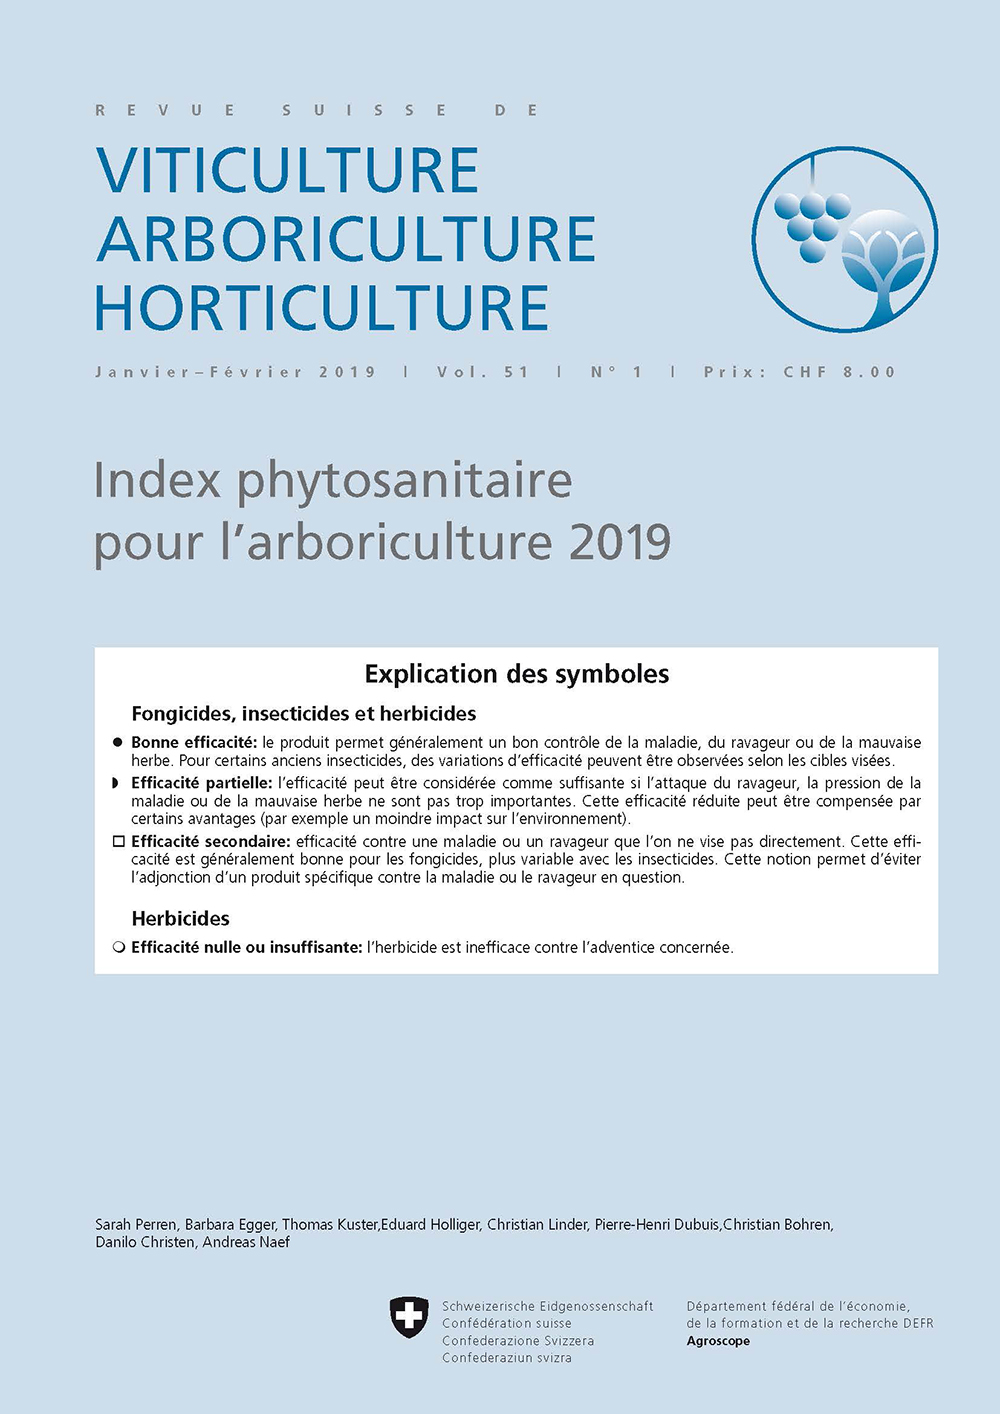 Index phytosanitaire pour l'arboriculture